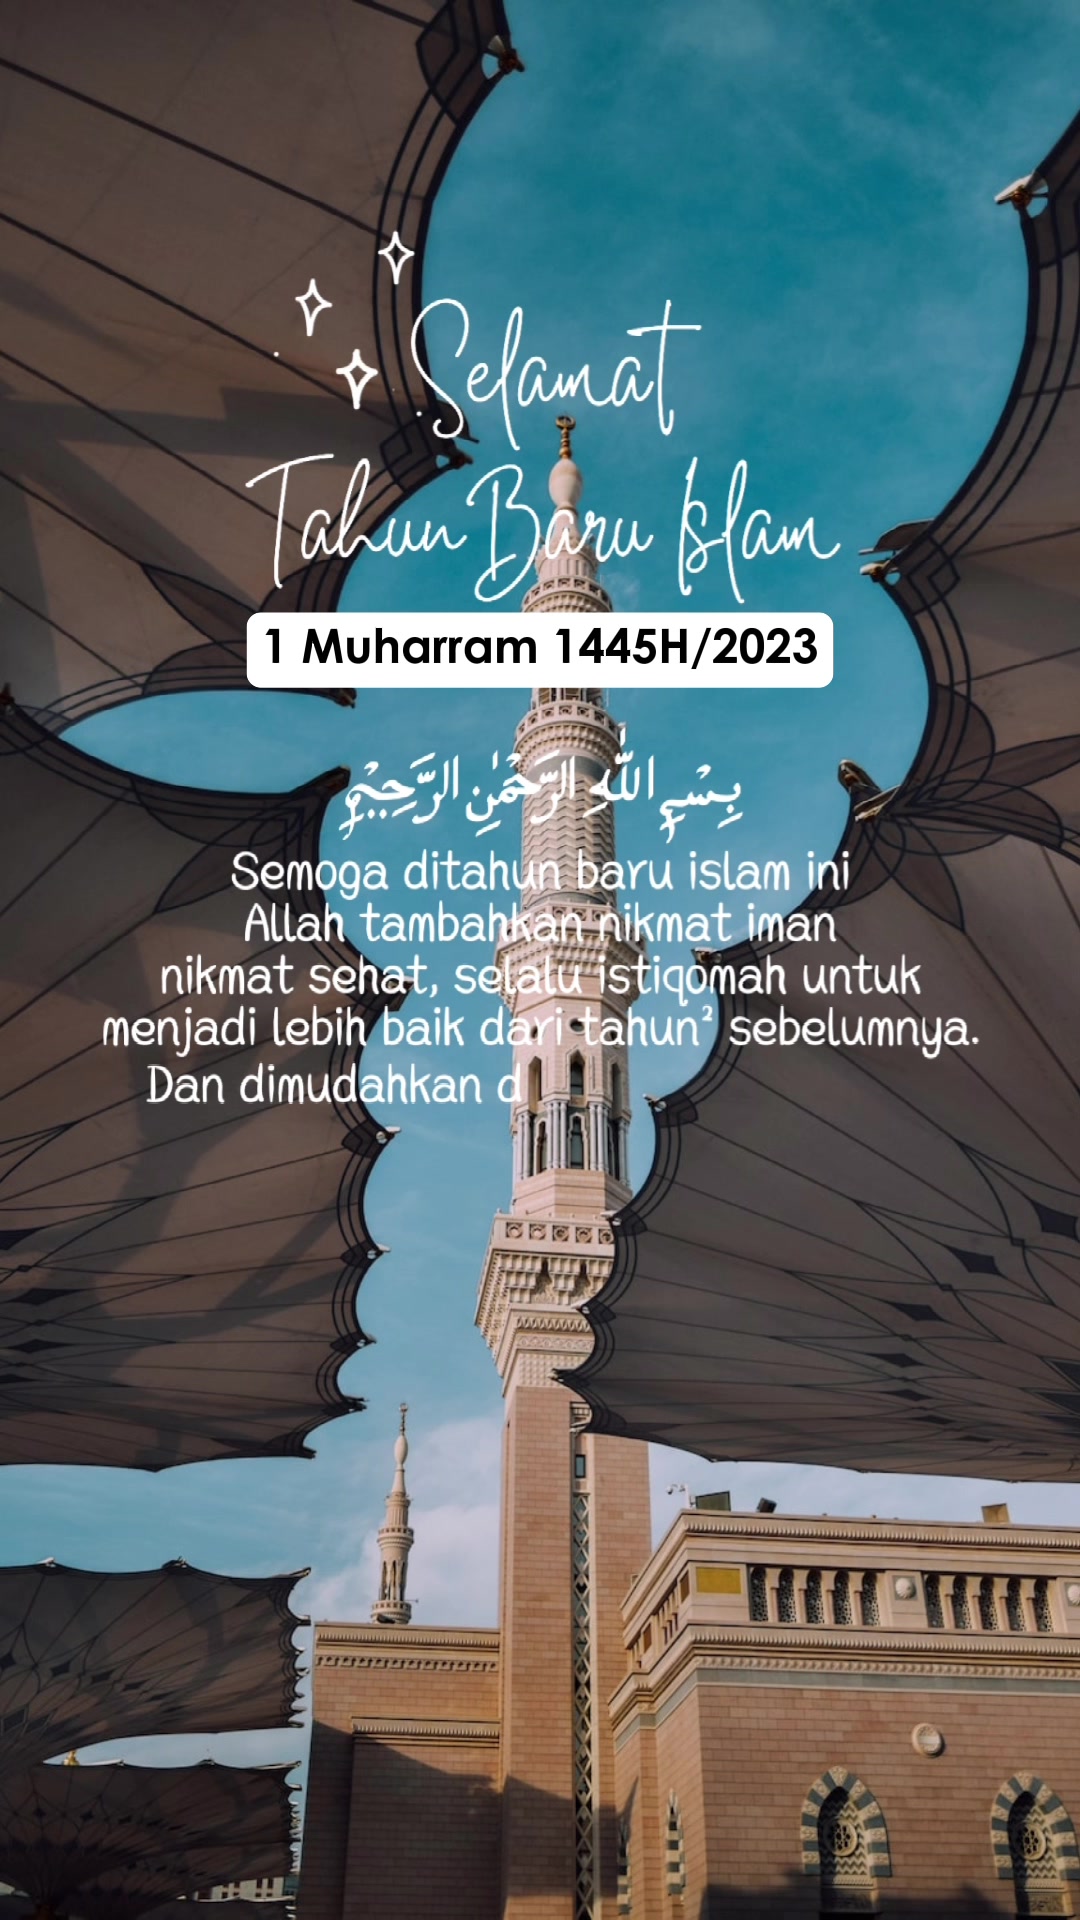 Salam Maal Hijrah 1445h/2023 